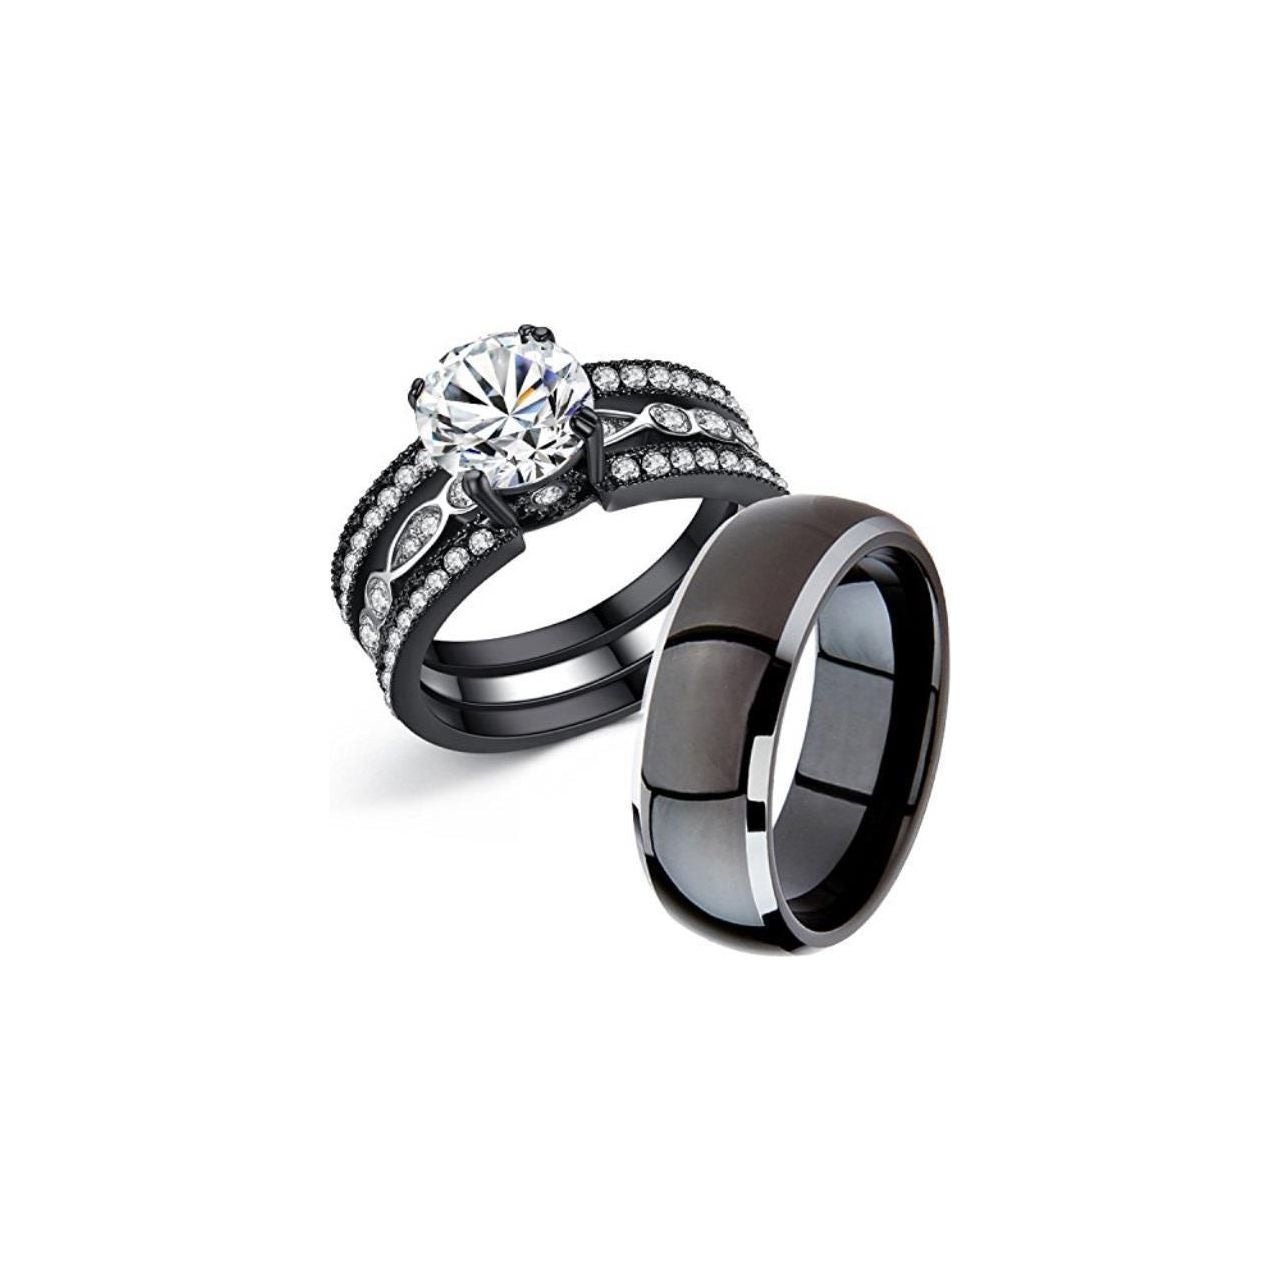 mabella couple rings black men's titanium matching band women cz stainless steel engagement wedding sets